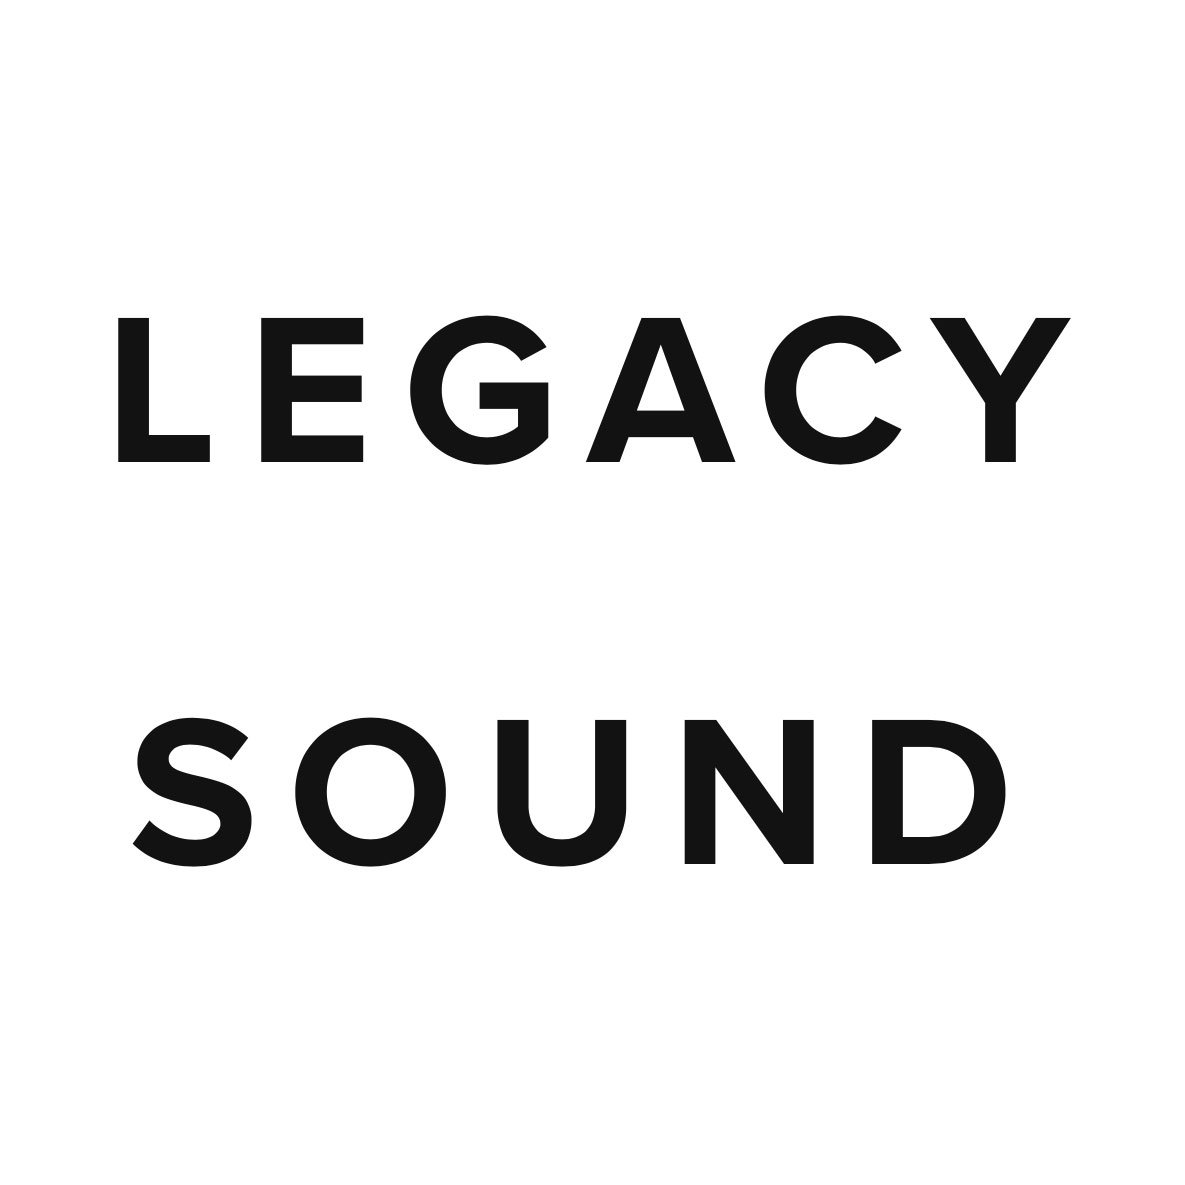 legacysound_logo.jpg